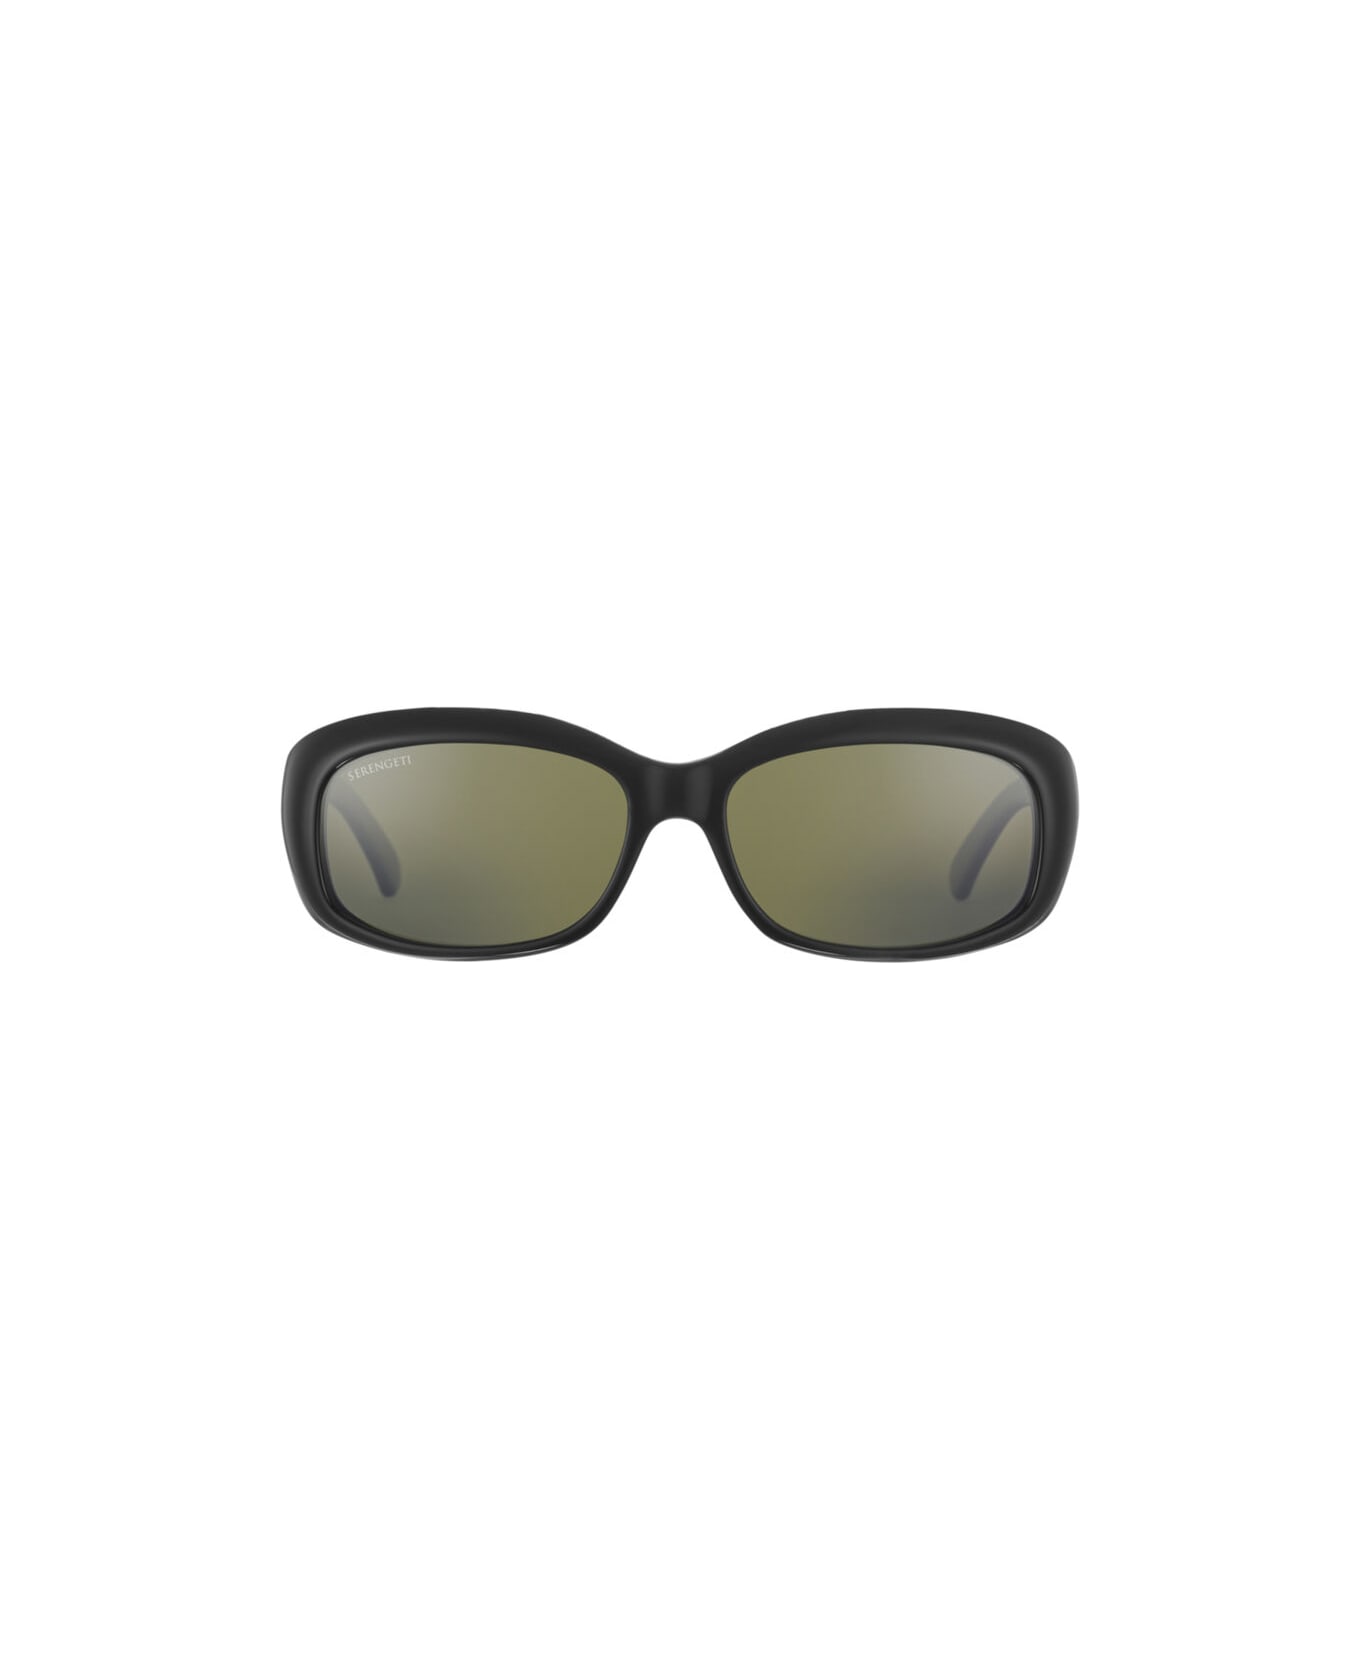 Serengeti Eyewear 7364 Sunglasses - Nero サングラス